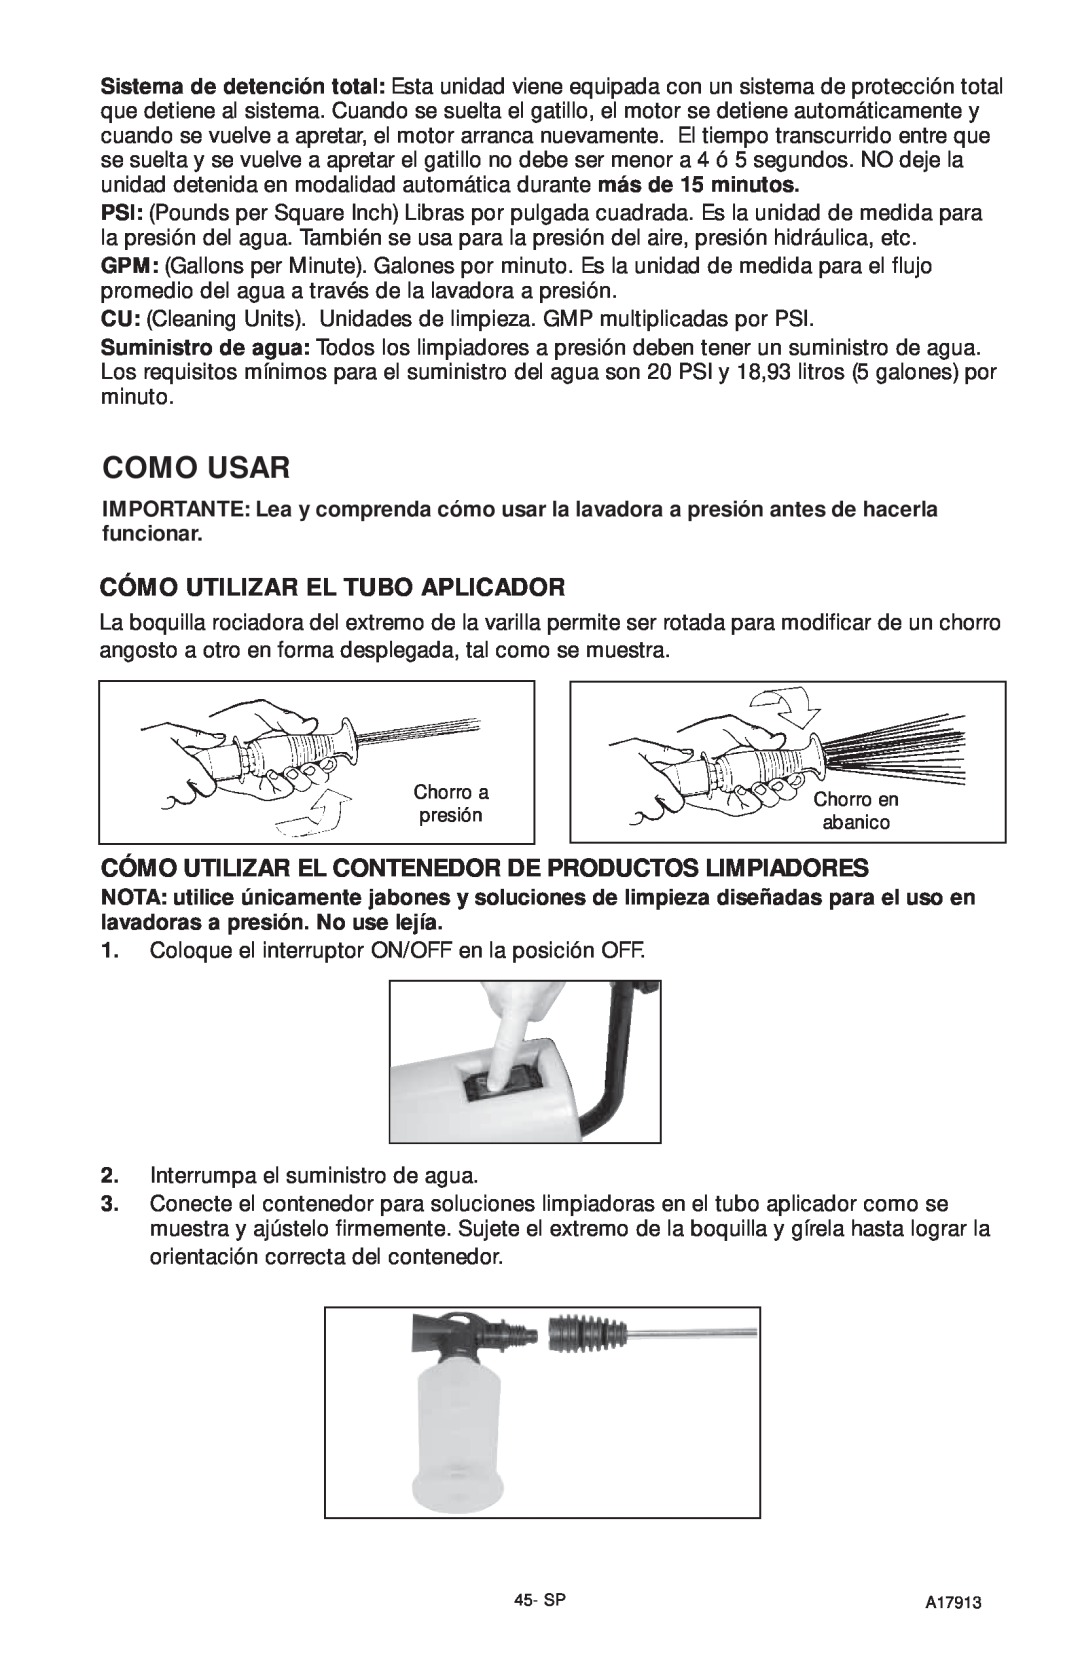 DeVillbiss Air Power Company A17913, VR1600E important safety instructions Como Usar, Cómo Utilizar El Tubo Aplicador 